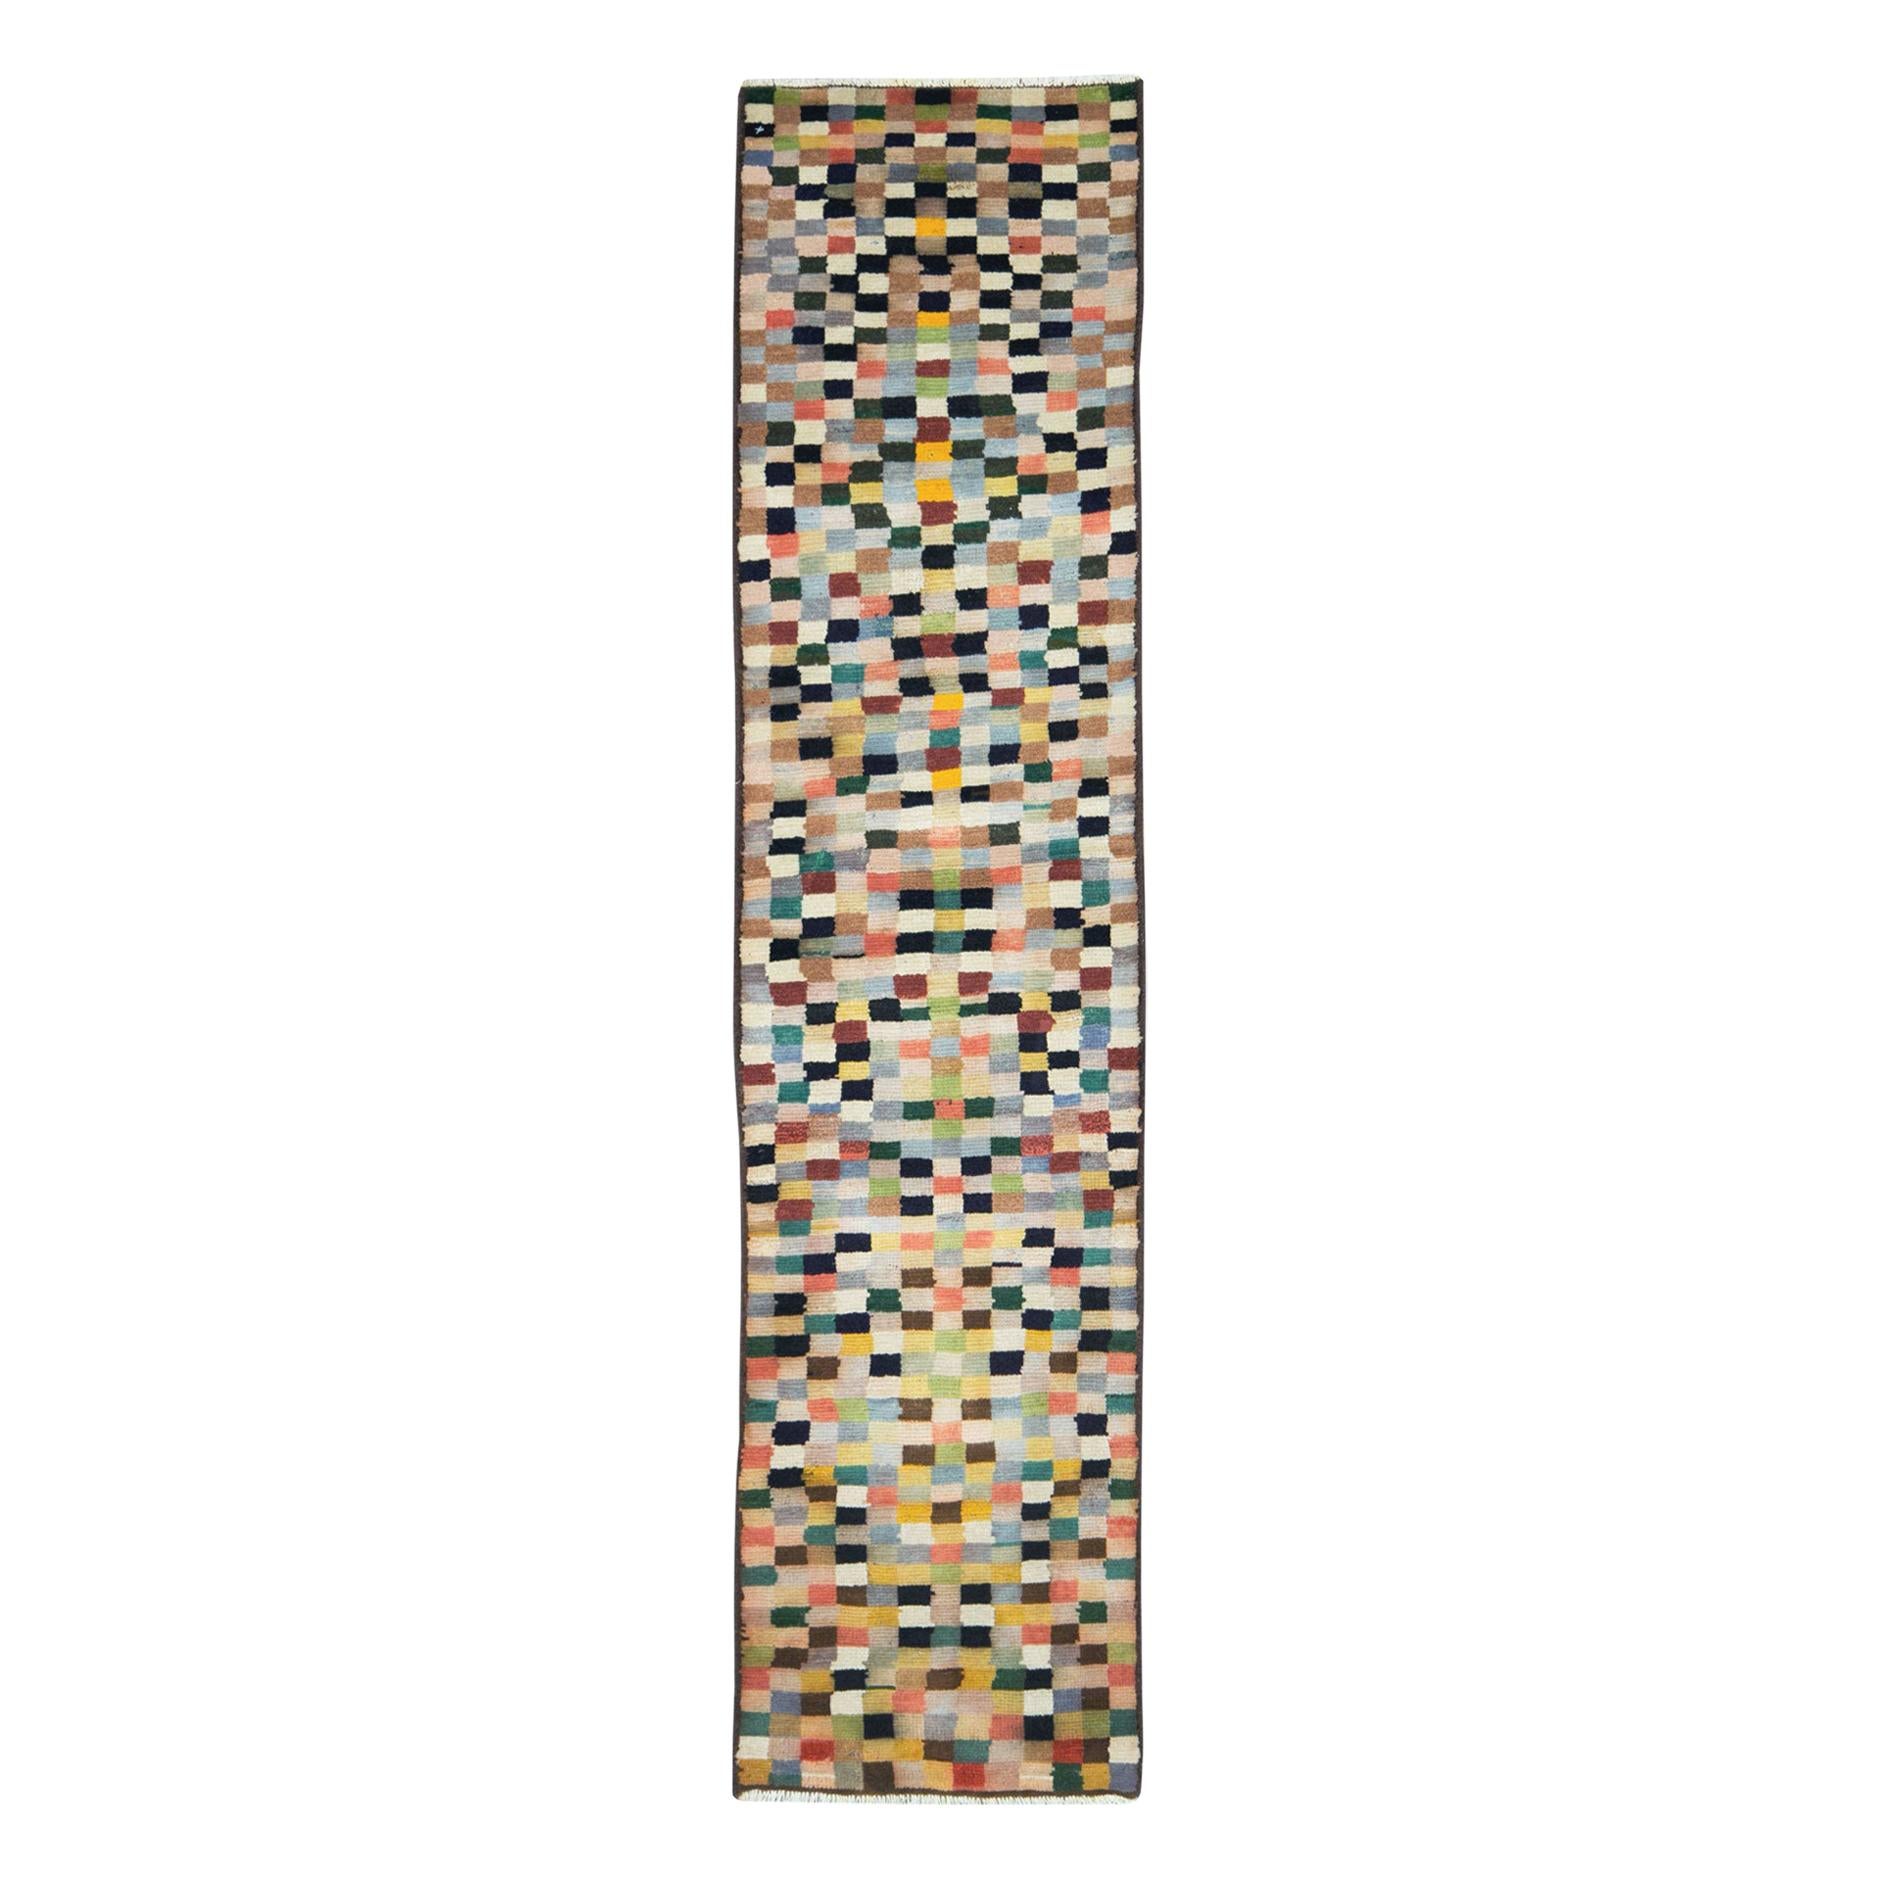 Midcentury Handmade Persian Art Deco Style Multicolored Checkerboard Runner